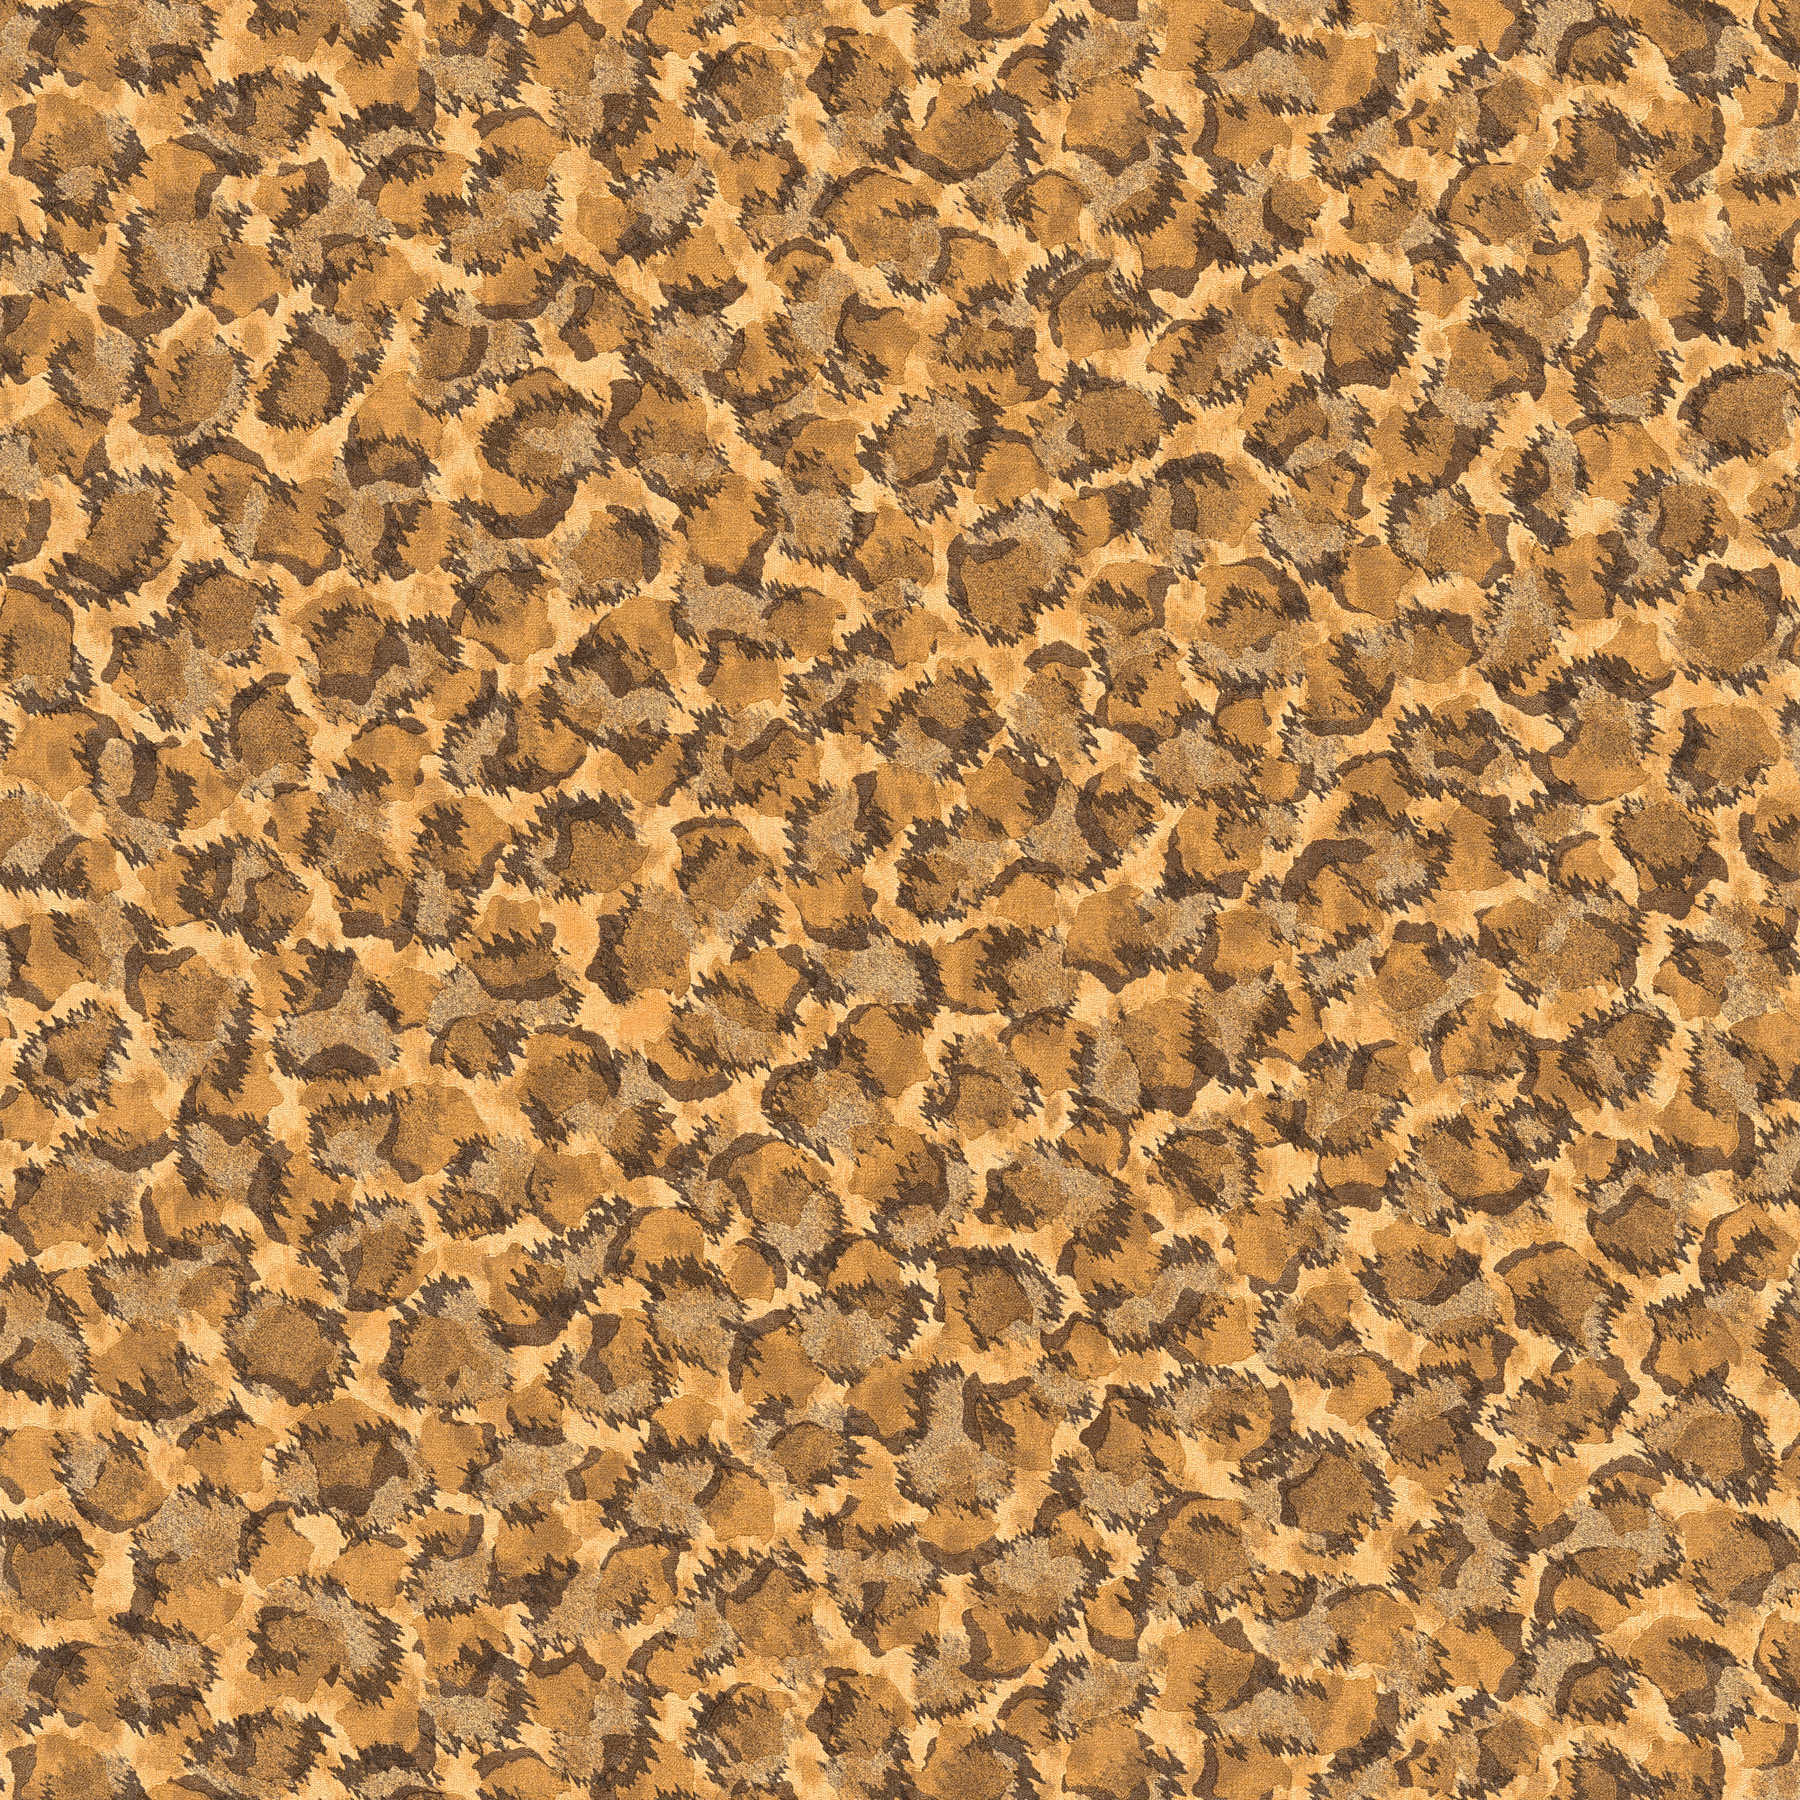 polka dots pattern wallpaper in ethnic style - brown, metallic
